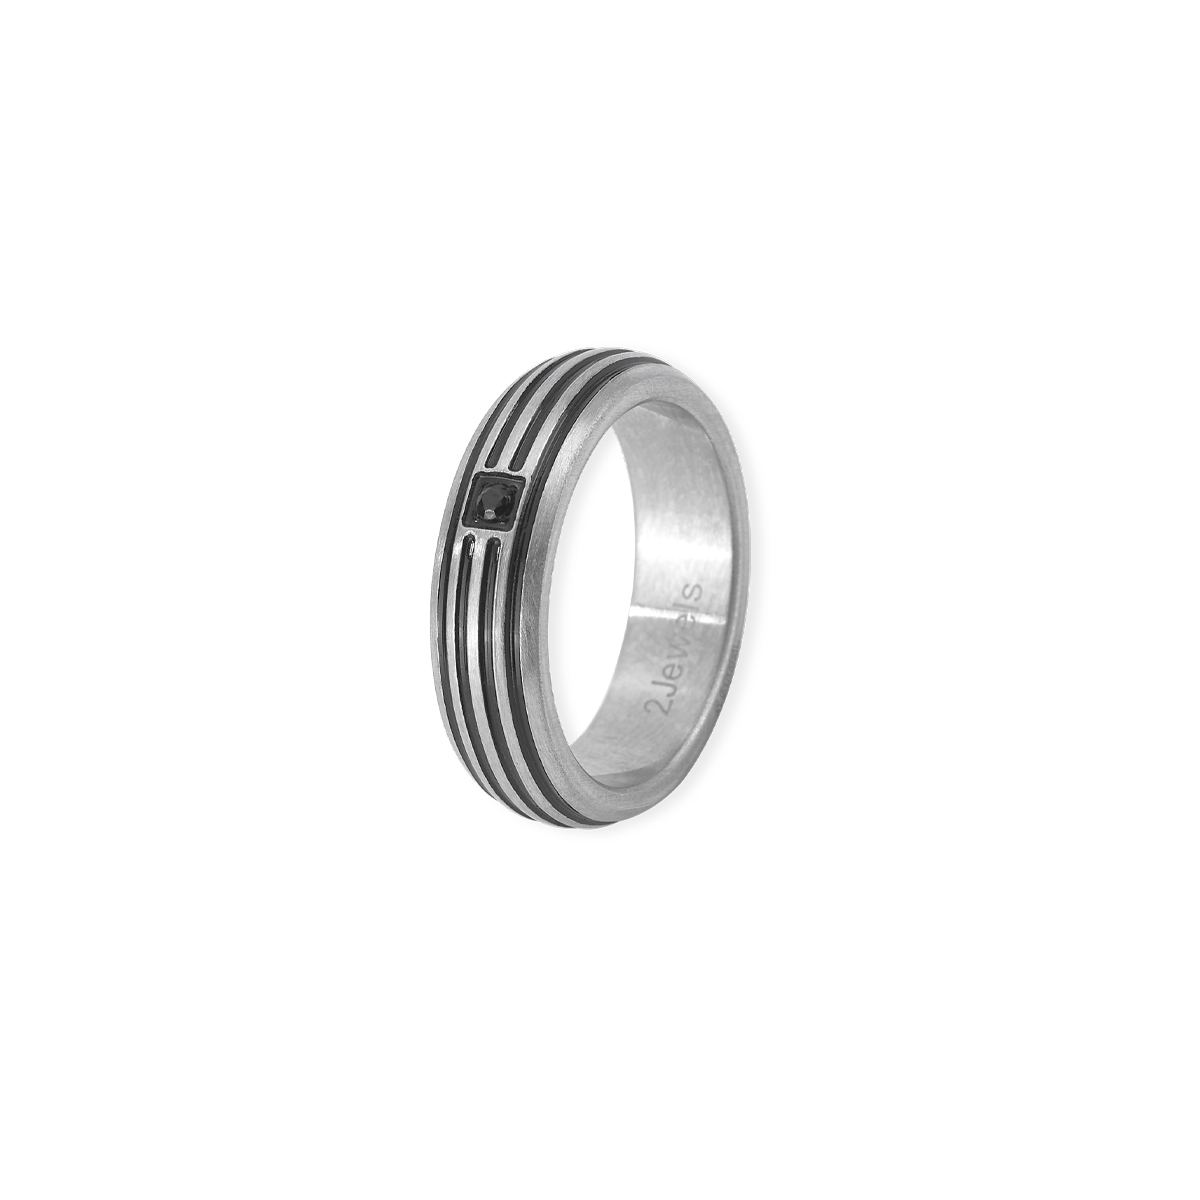 Anello 2Jewels Uomo Man's Ring misura 21 221076-21 